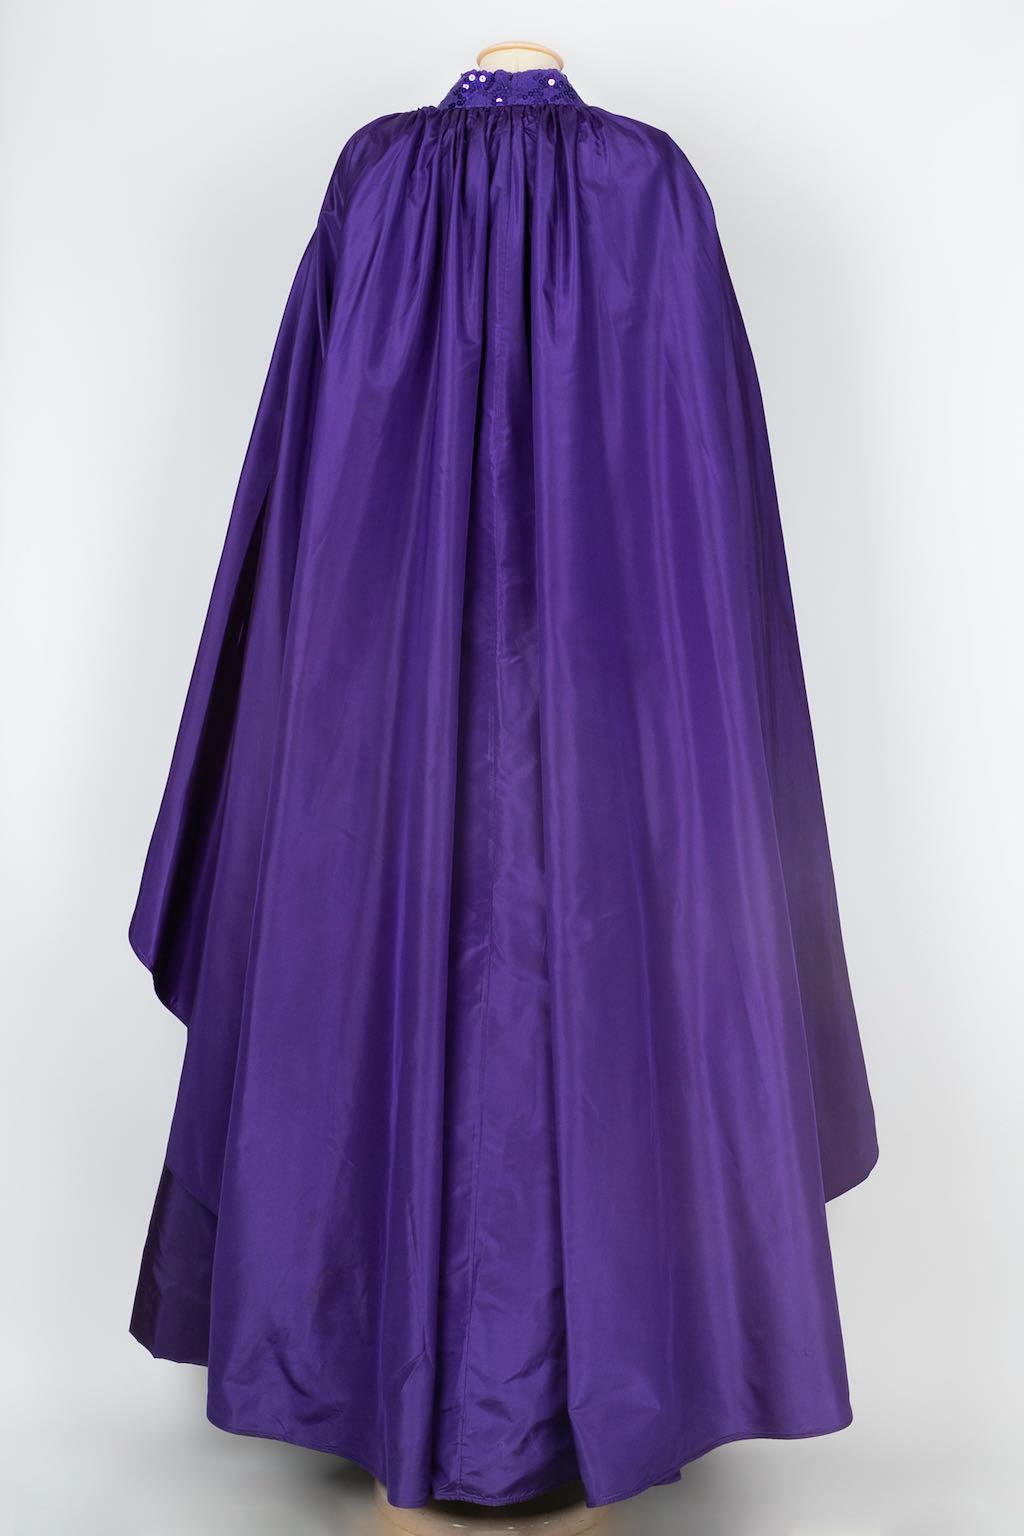 Azzaro Evening Taffeta Cape Embroidered Dress, Size 40FR 1